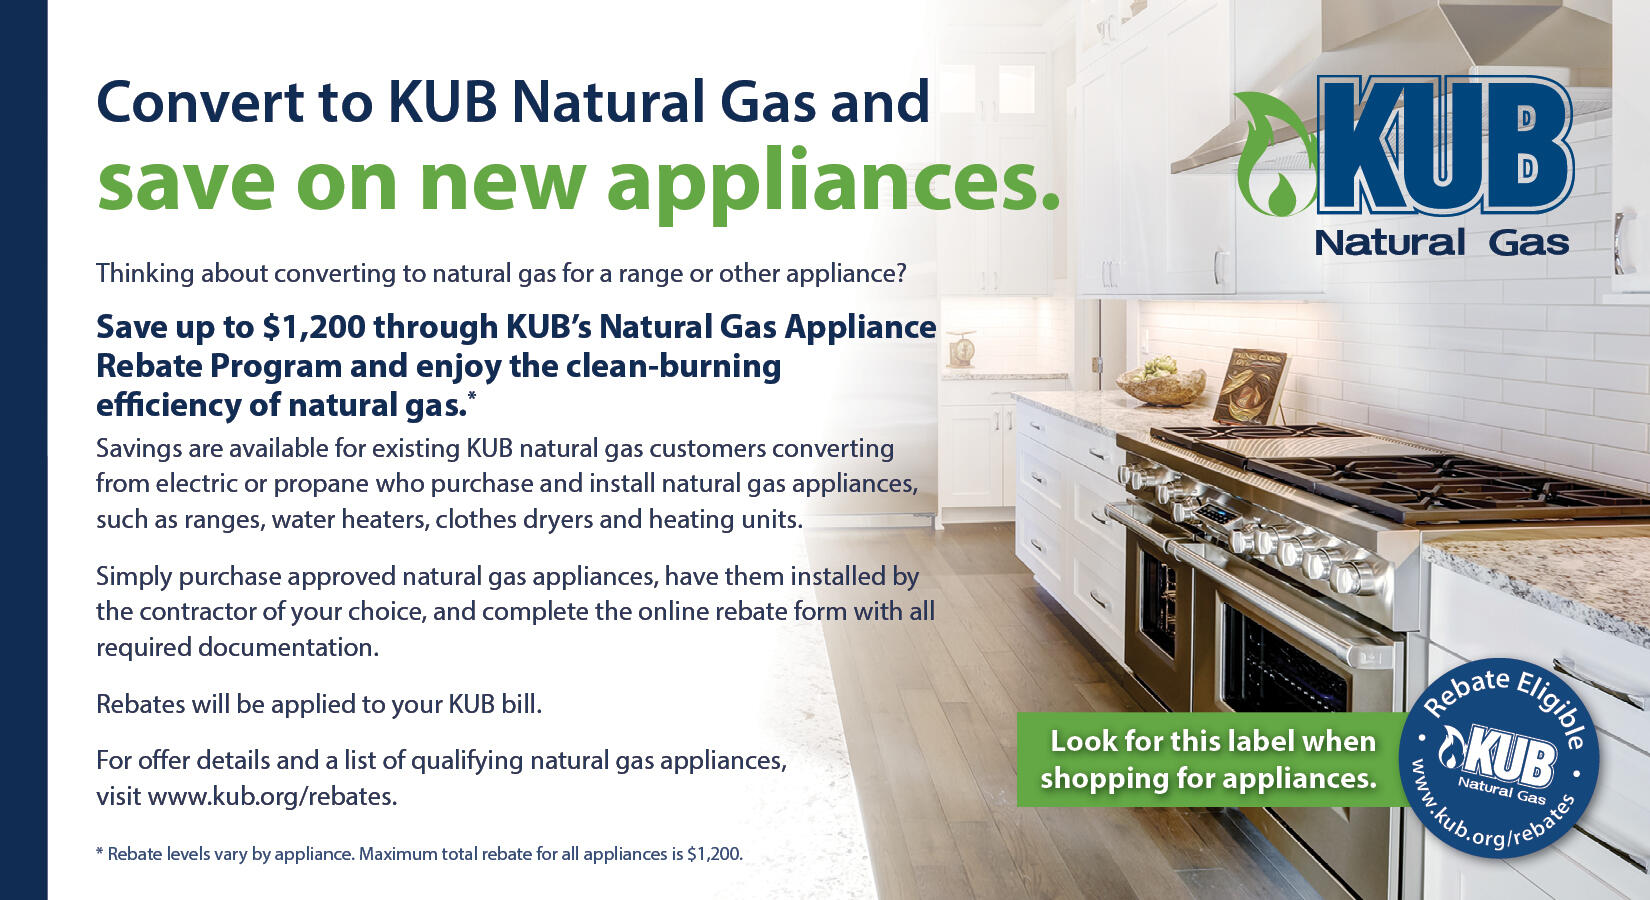 kub-offering-appliance-rebate-program-to-natural-gas-customers